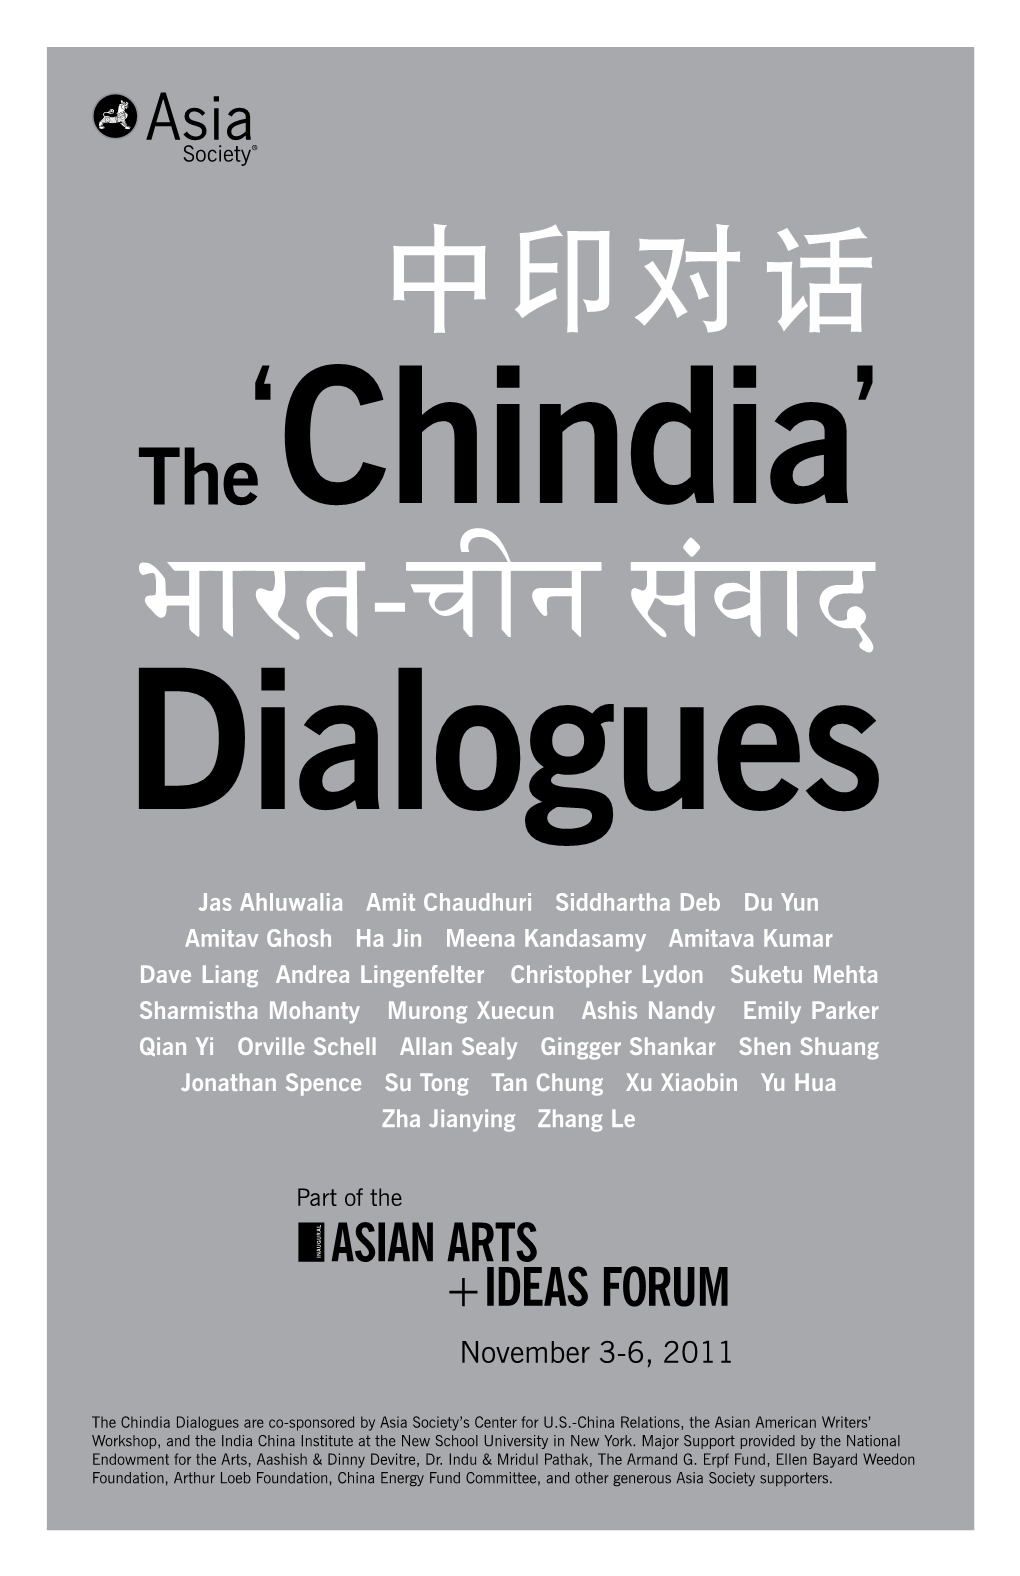 Asian Arts Ideas Forum